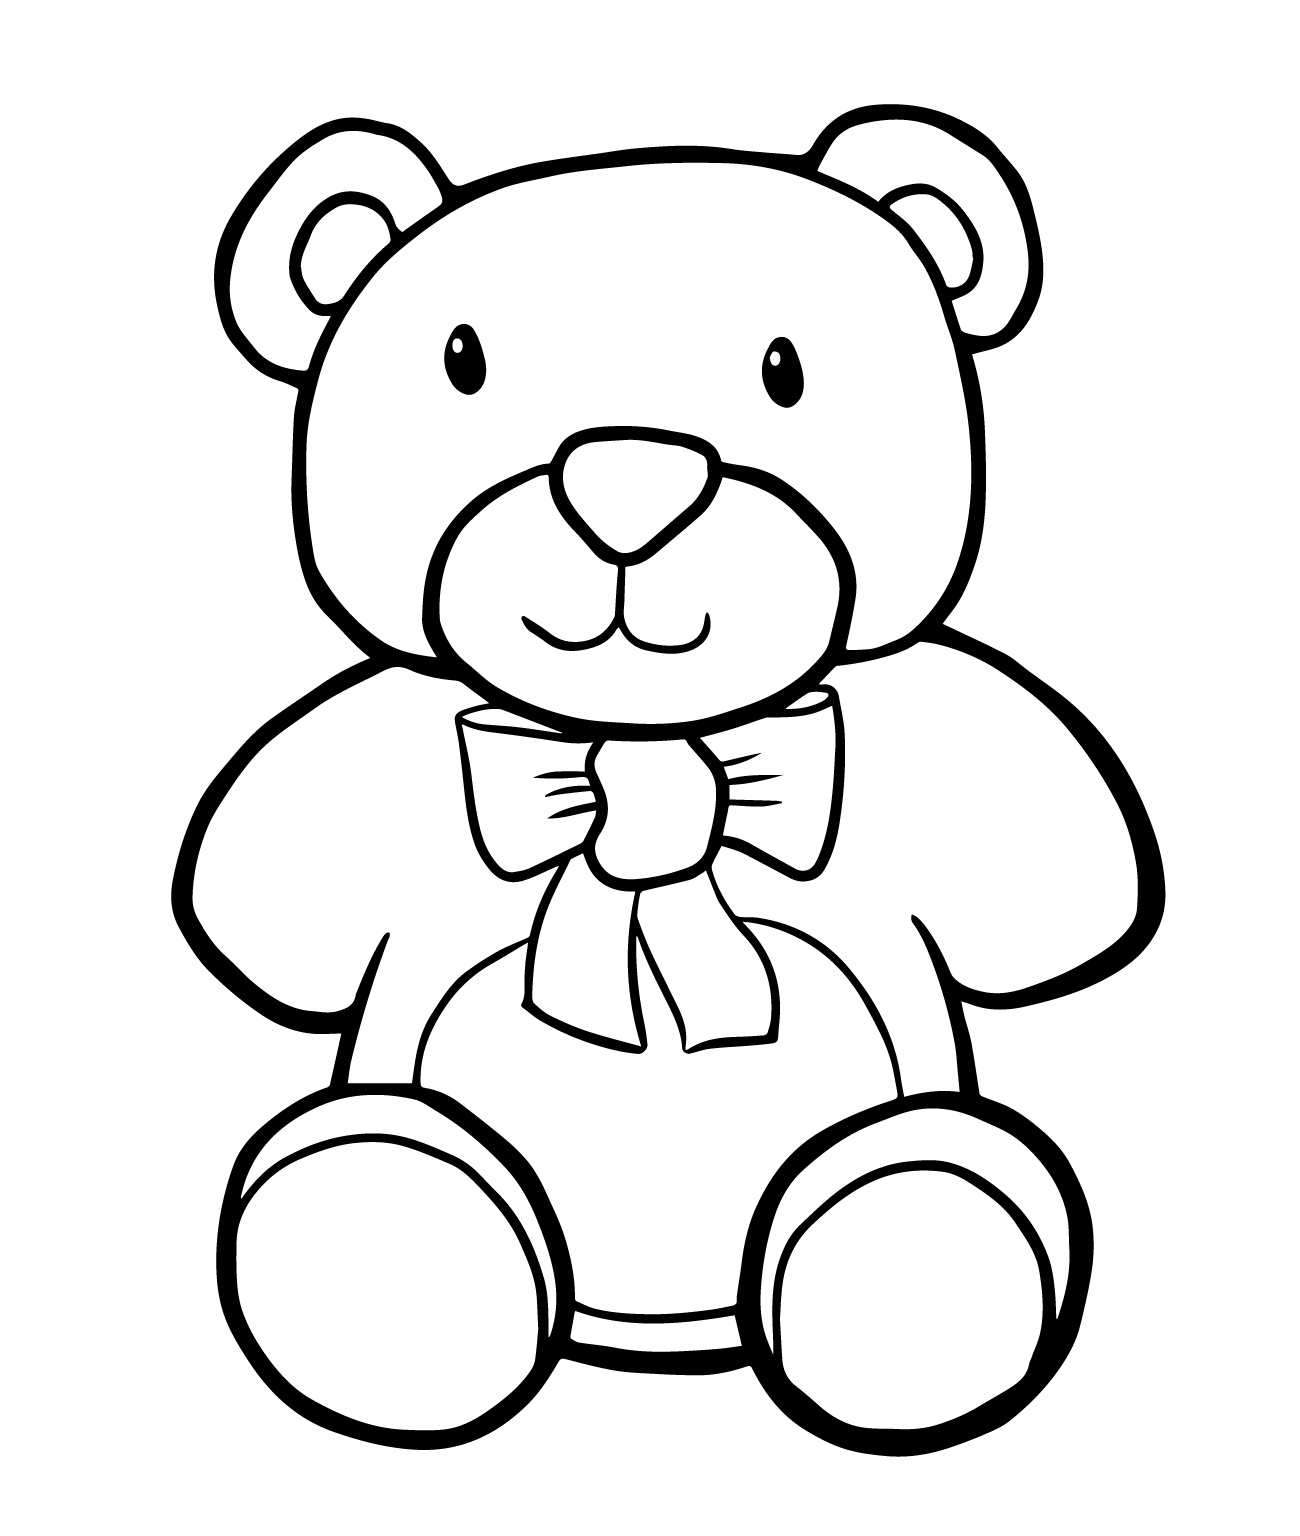 Cool Teddy Bear Drawings - ClipArt Best